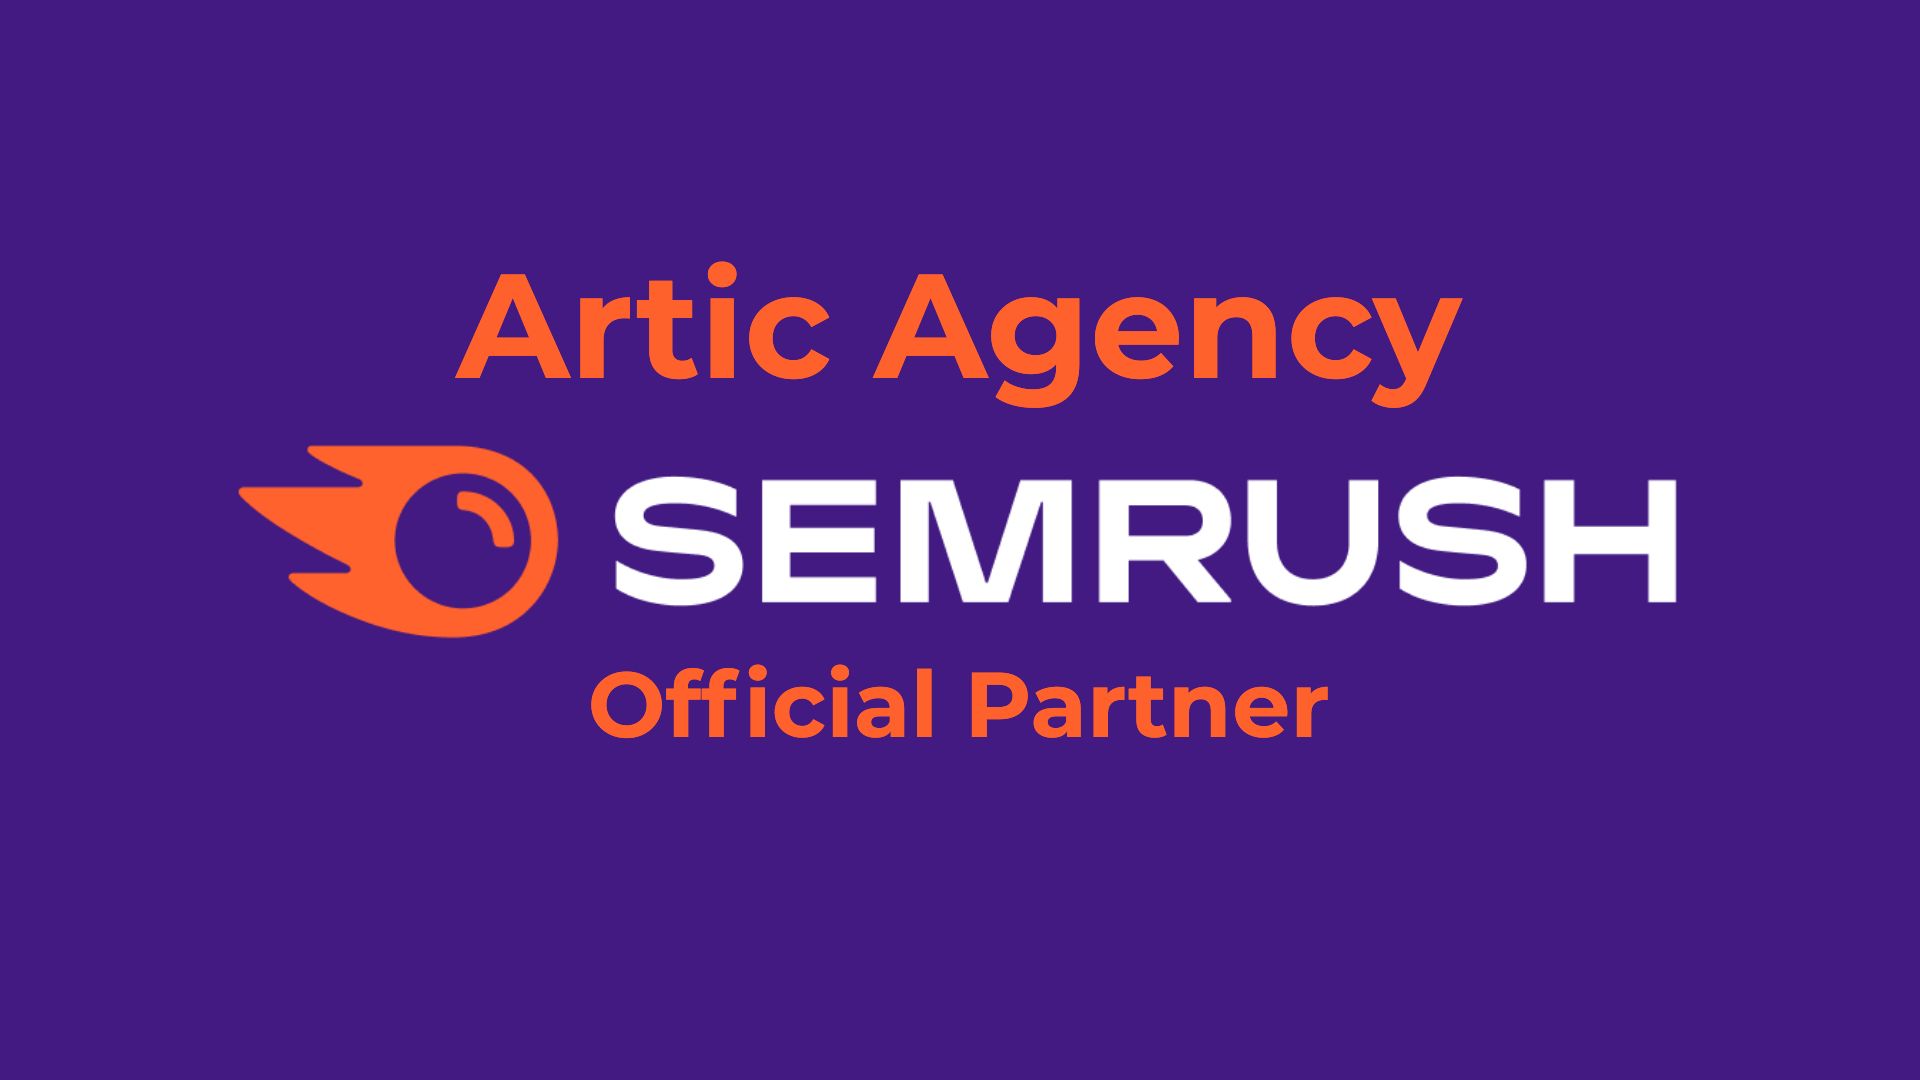 arctic agency semrush partner barcelona